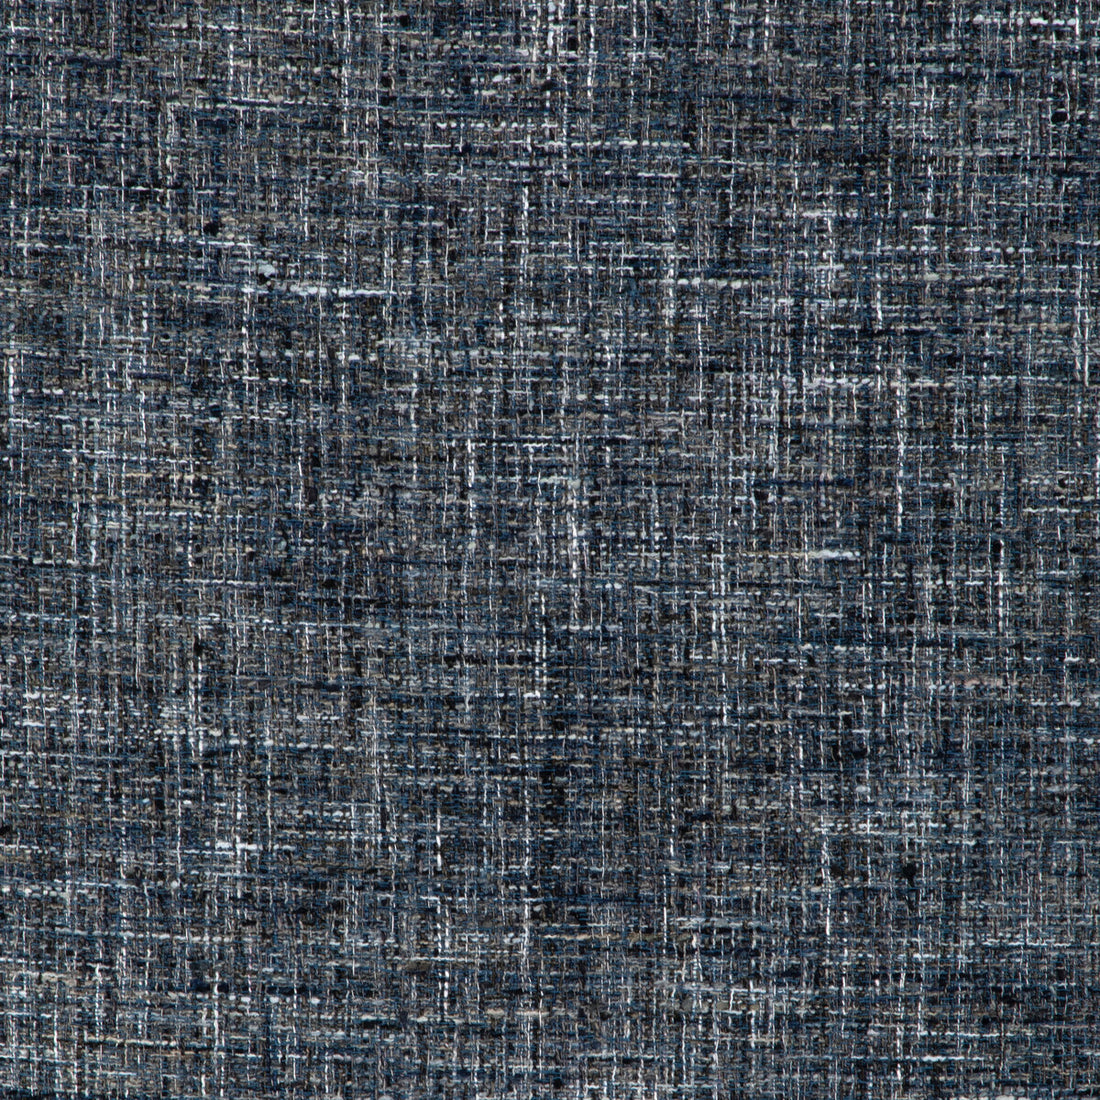 Kravet Smart fabric in 36660-5 color - pattern 36660.5.0 - by Kravet Smart in the Performance Kravetarmor collection